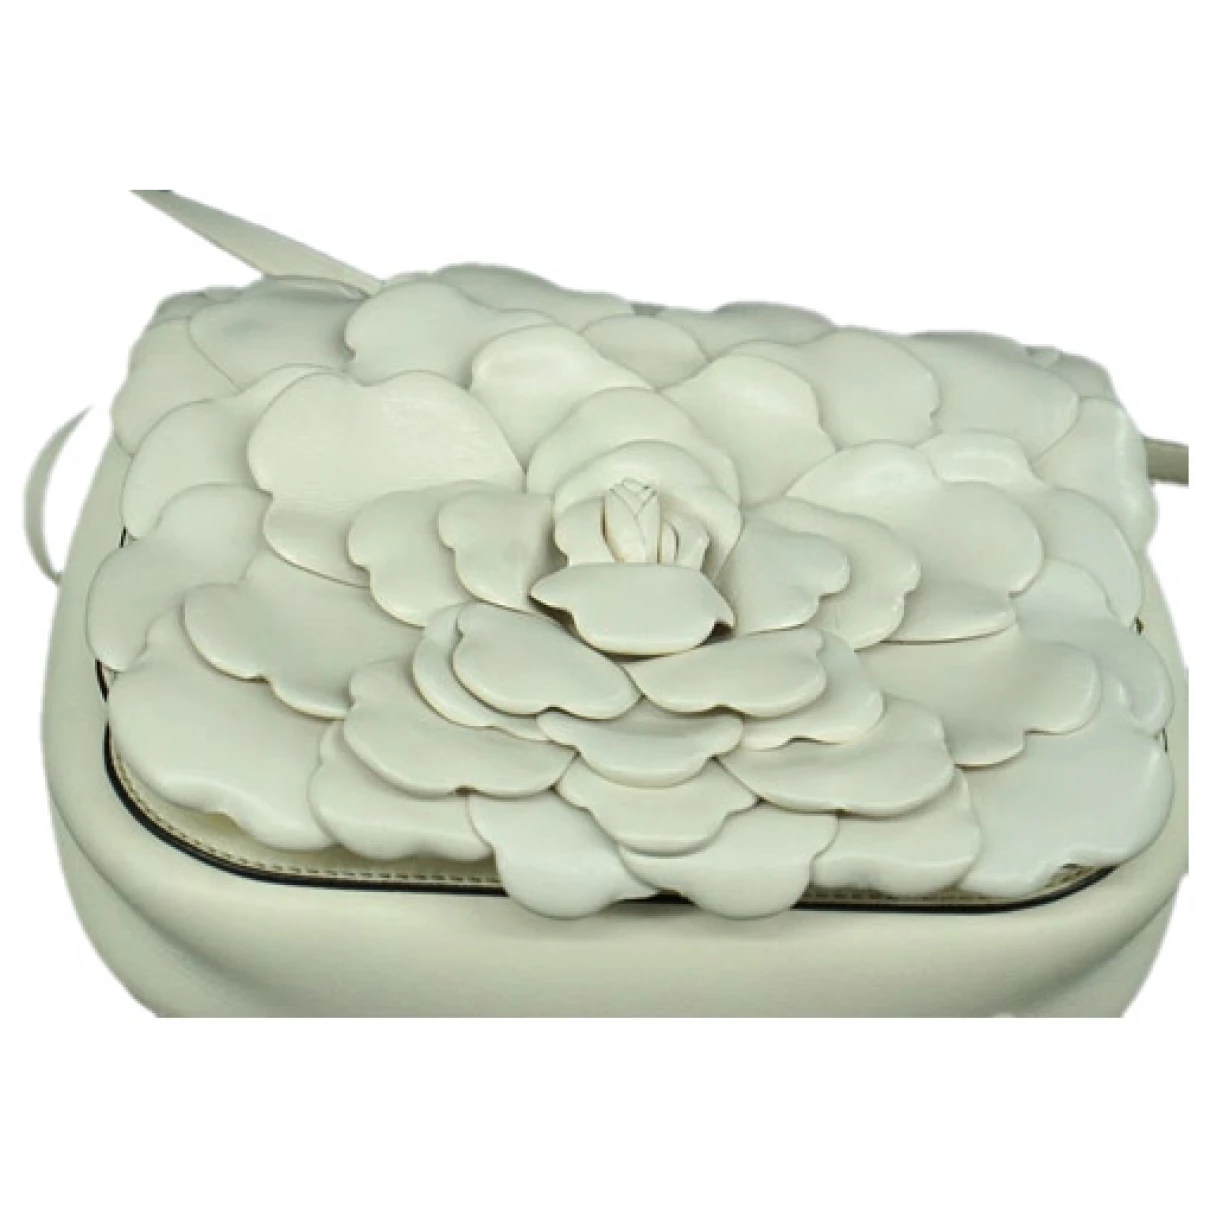 Pre-owned Valentino Garavani Atelier Leather Handbag In White